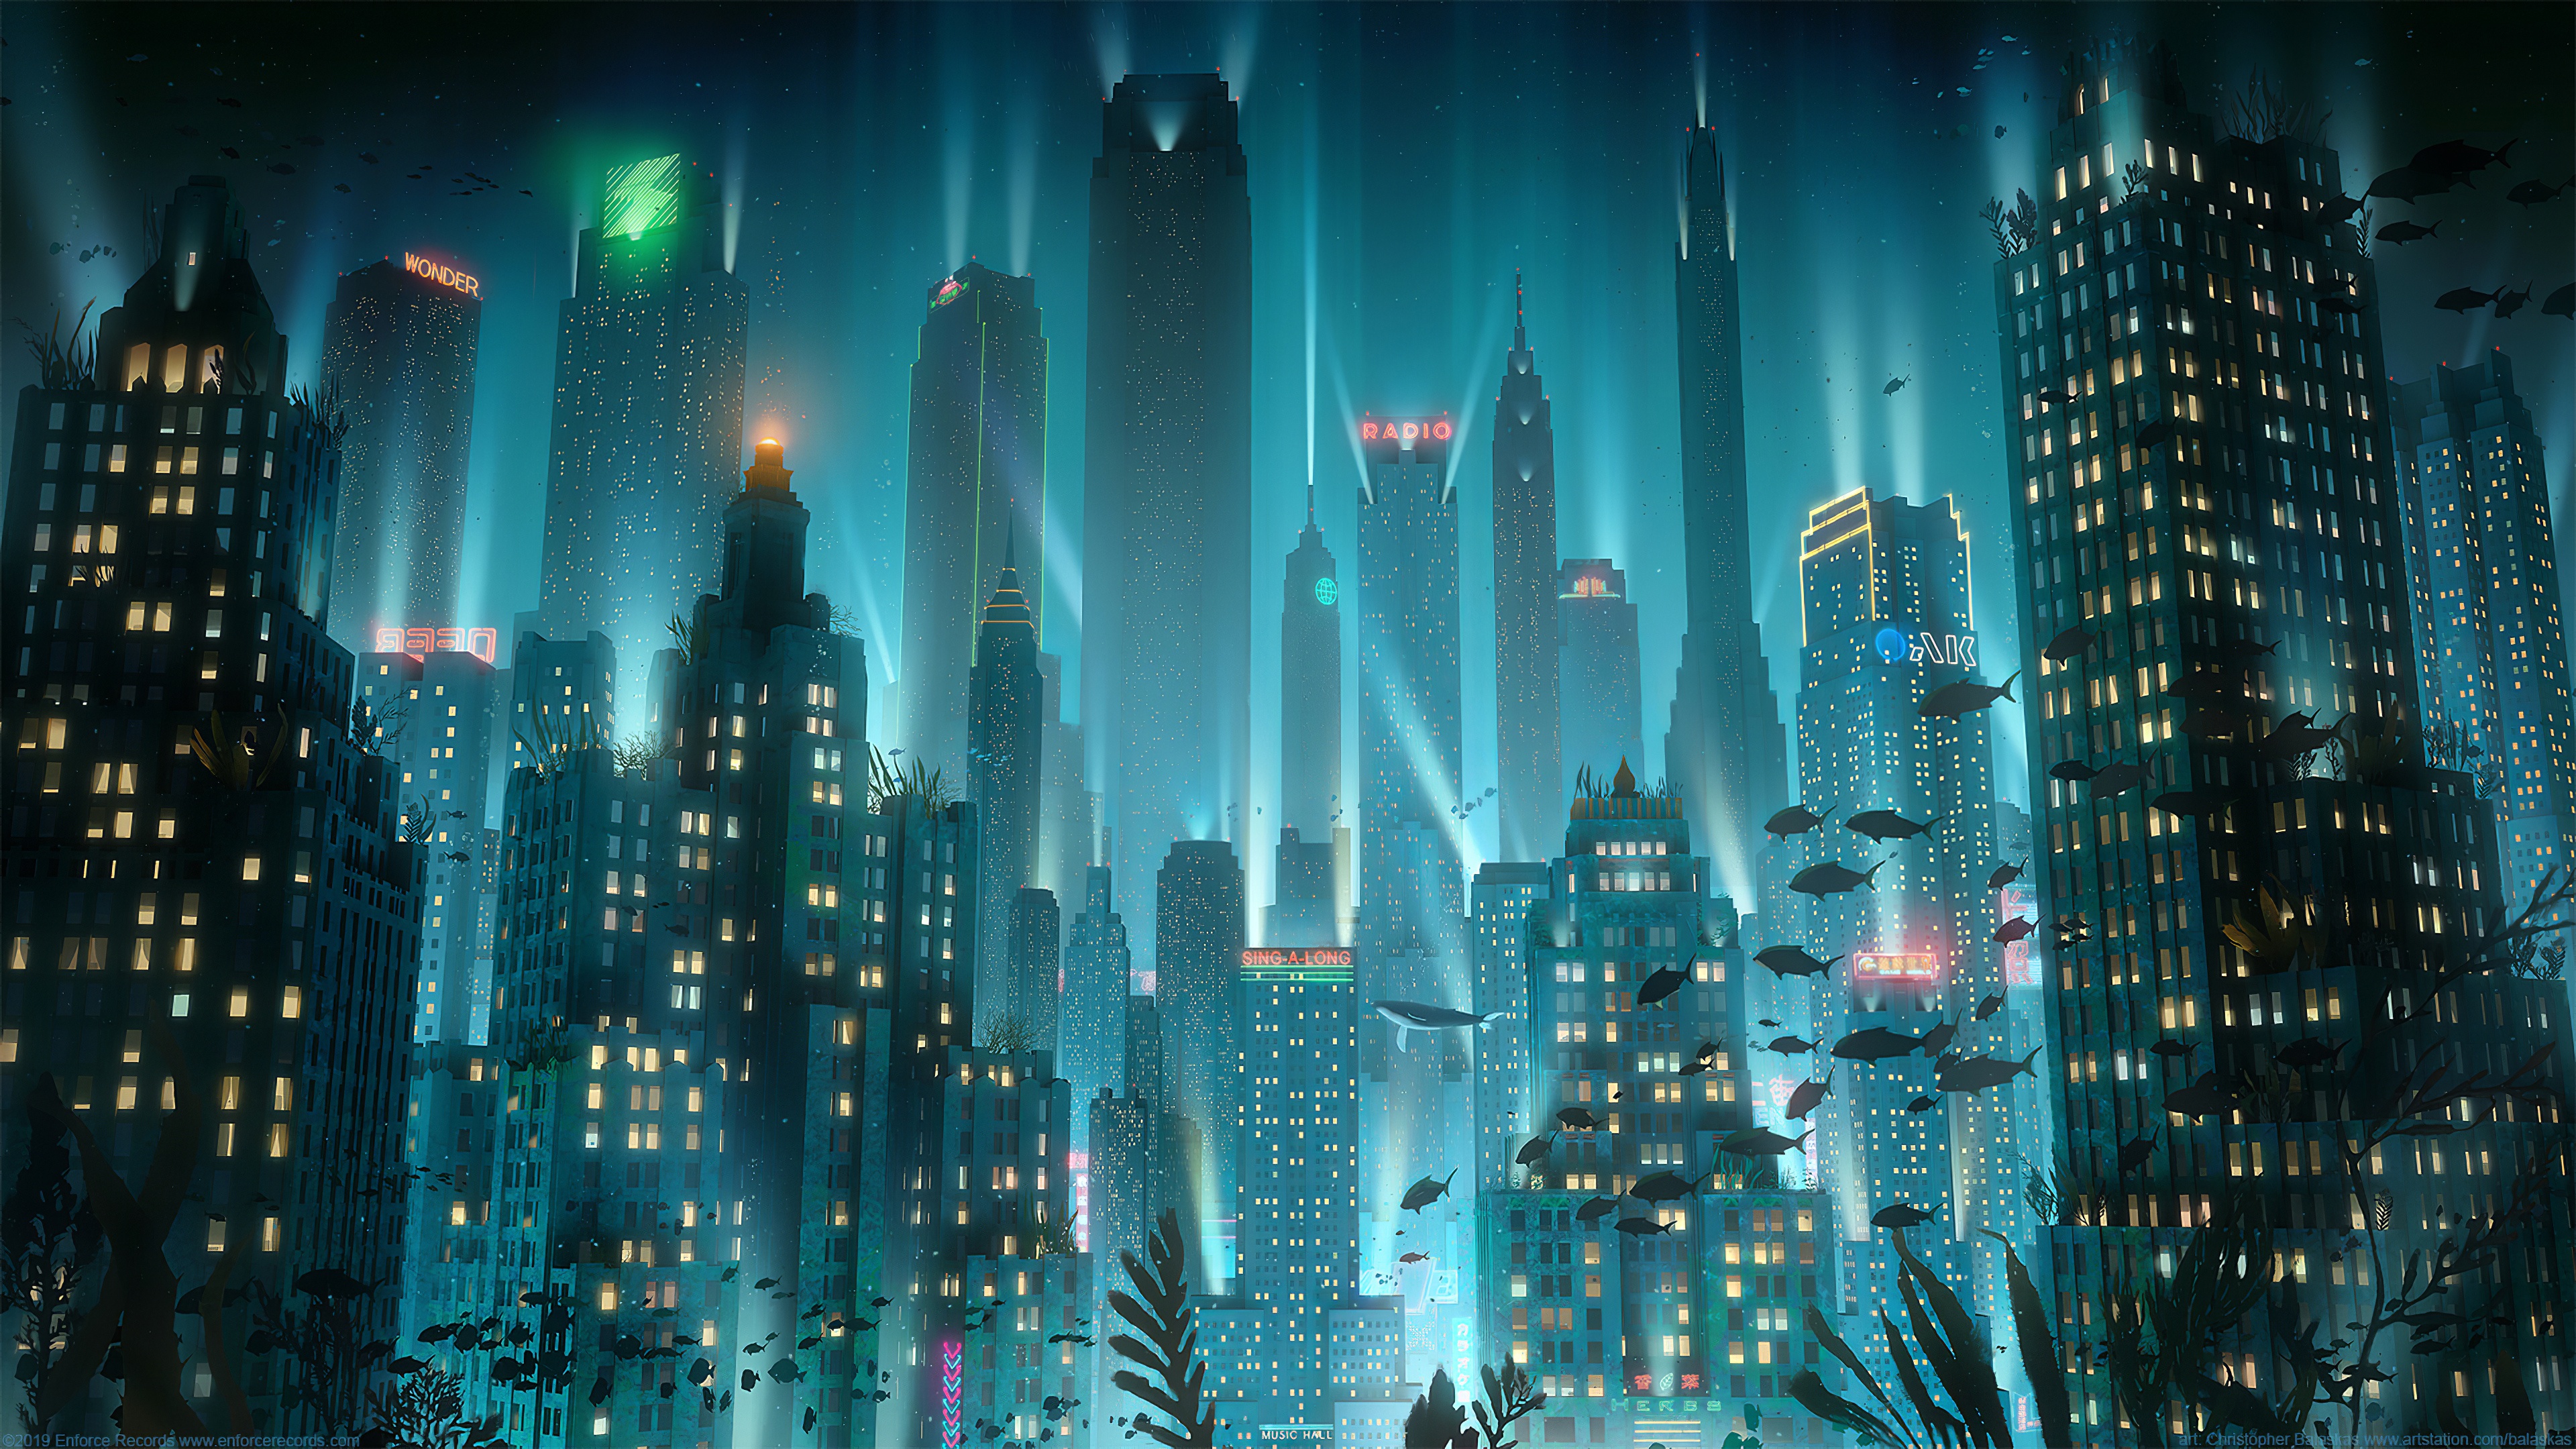 General 3840x2160 Christopher Balaskas city underwater artwork cityscape 2019 (year) BioShock Rapture cyan video game art